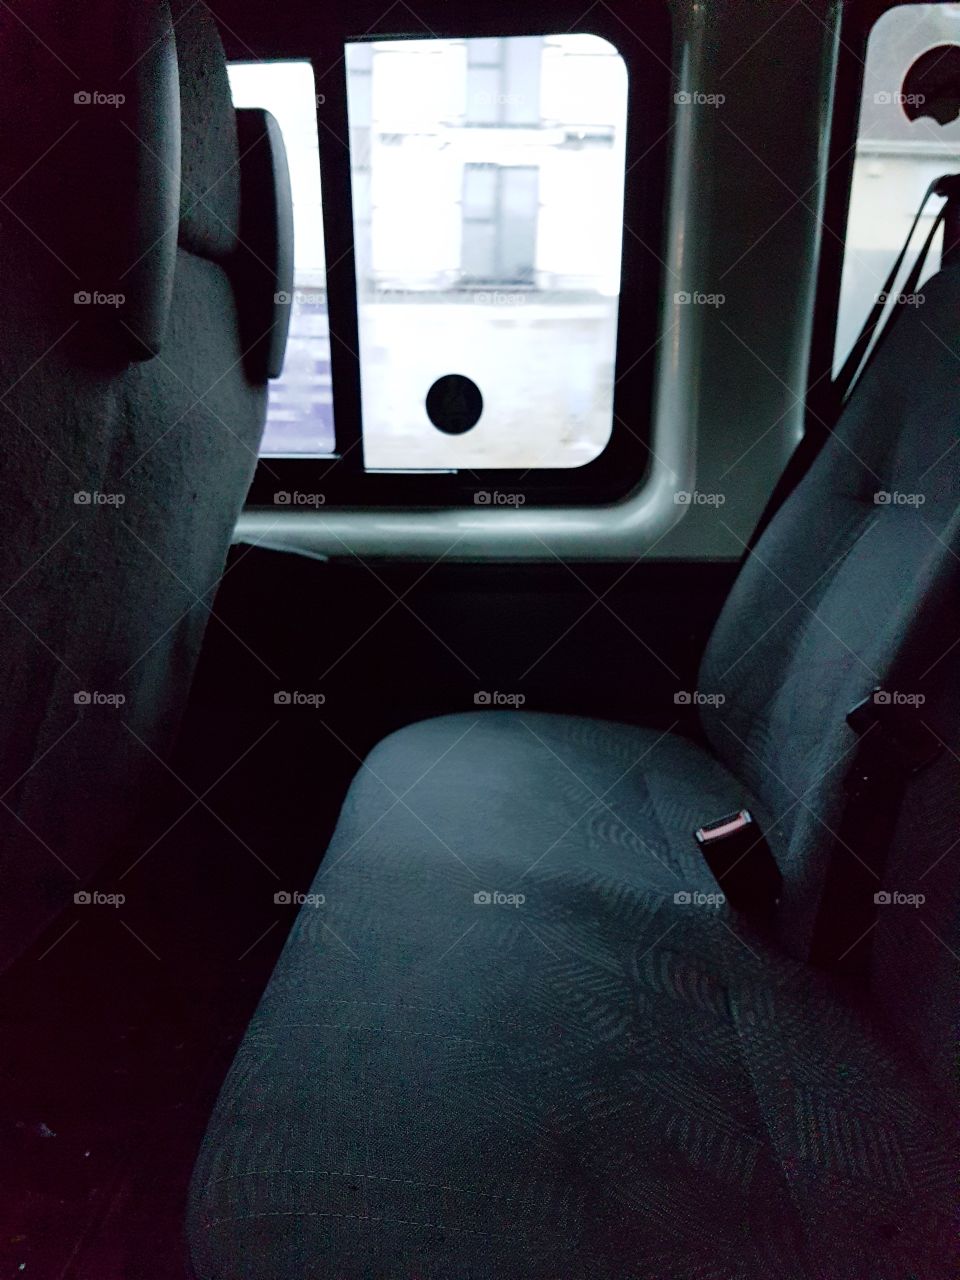 window seat